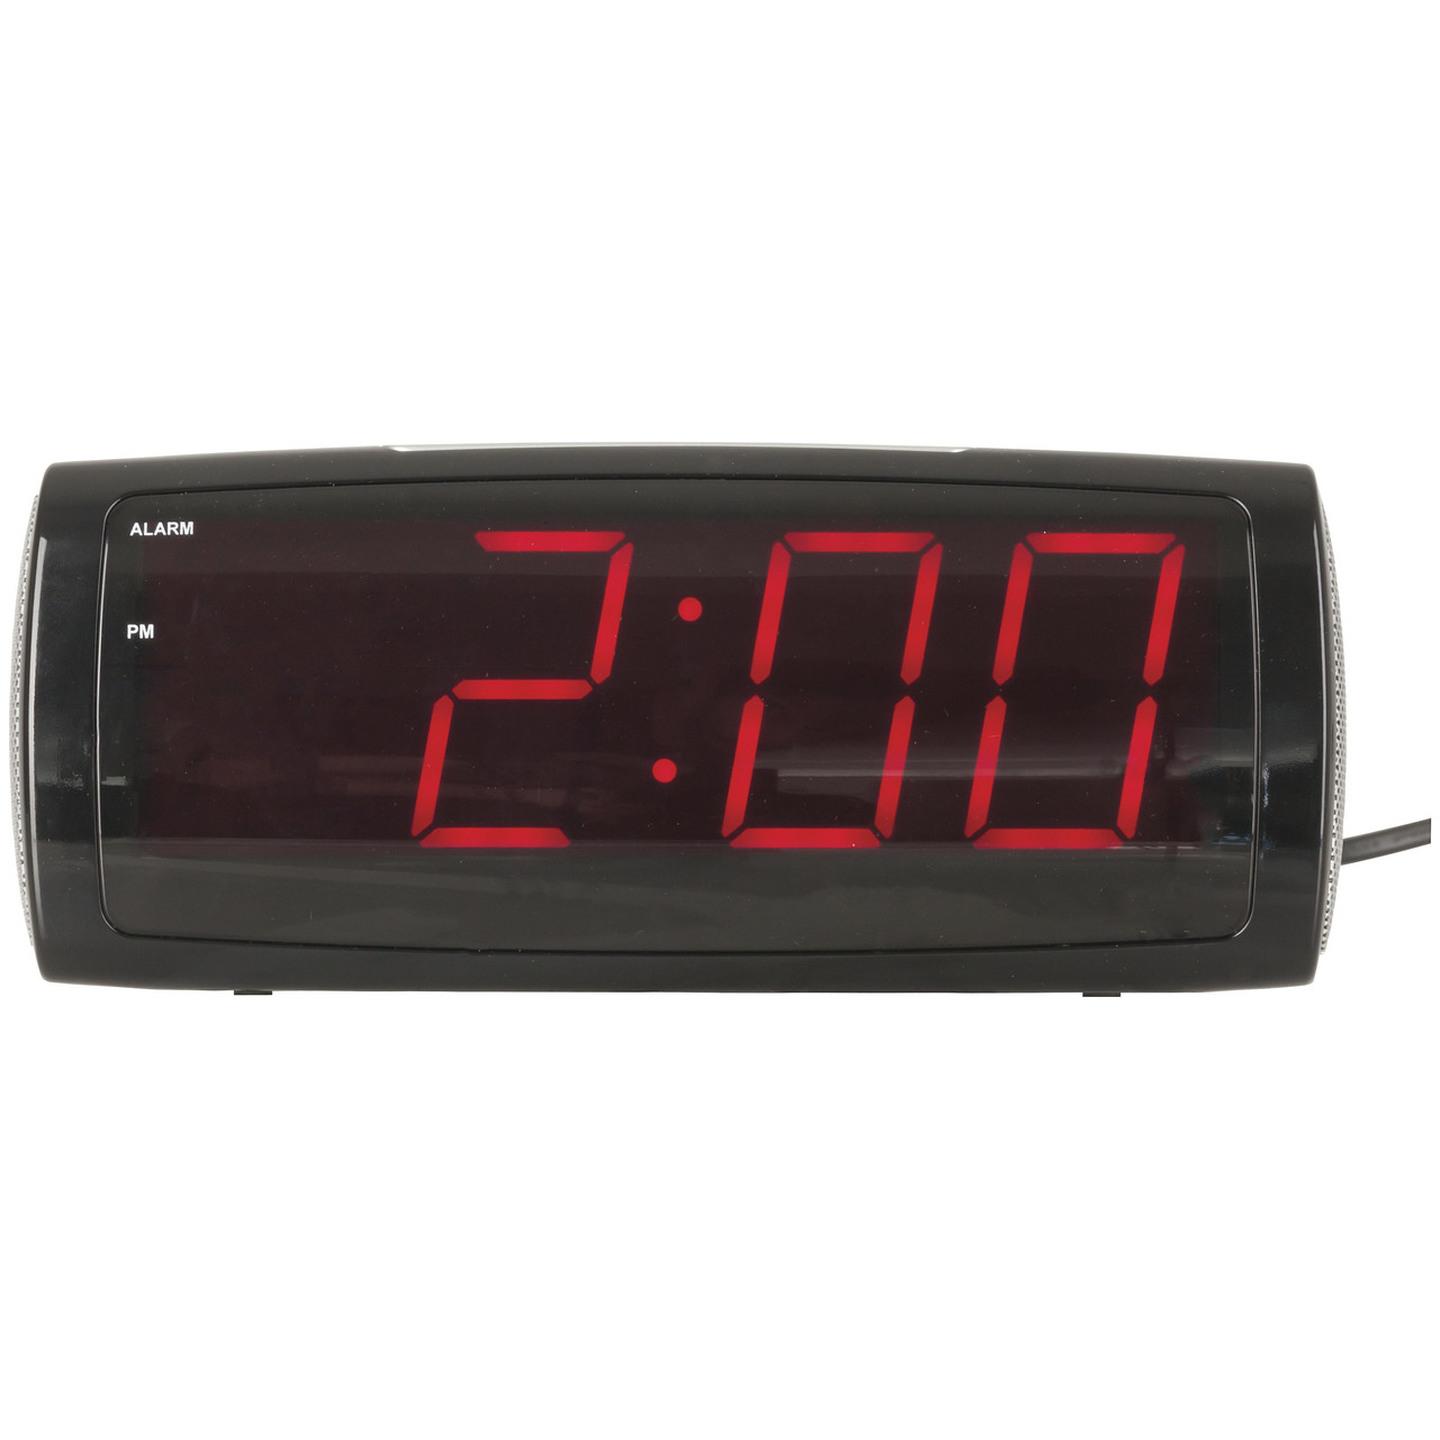 Large Red LED Display Alarm Clock